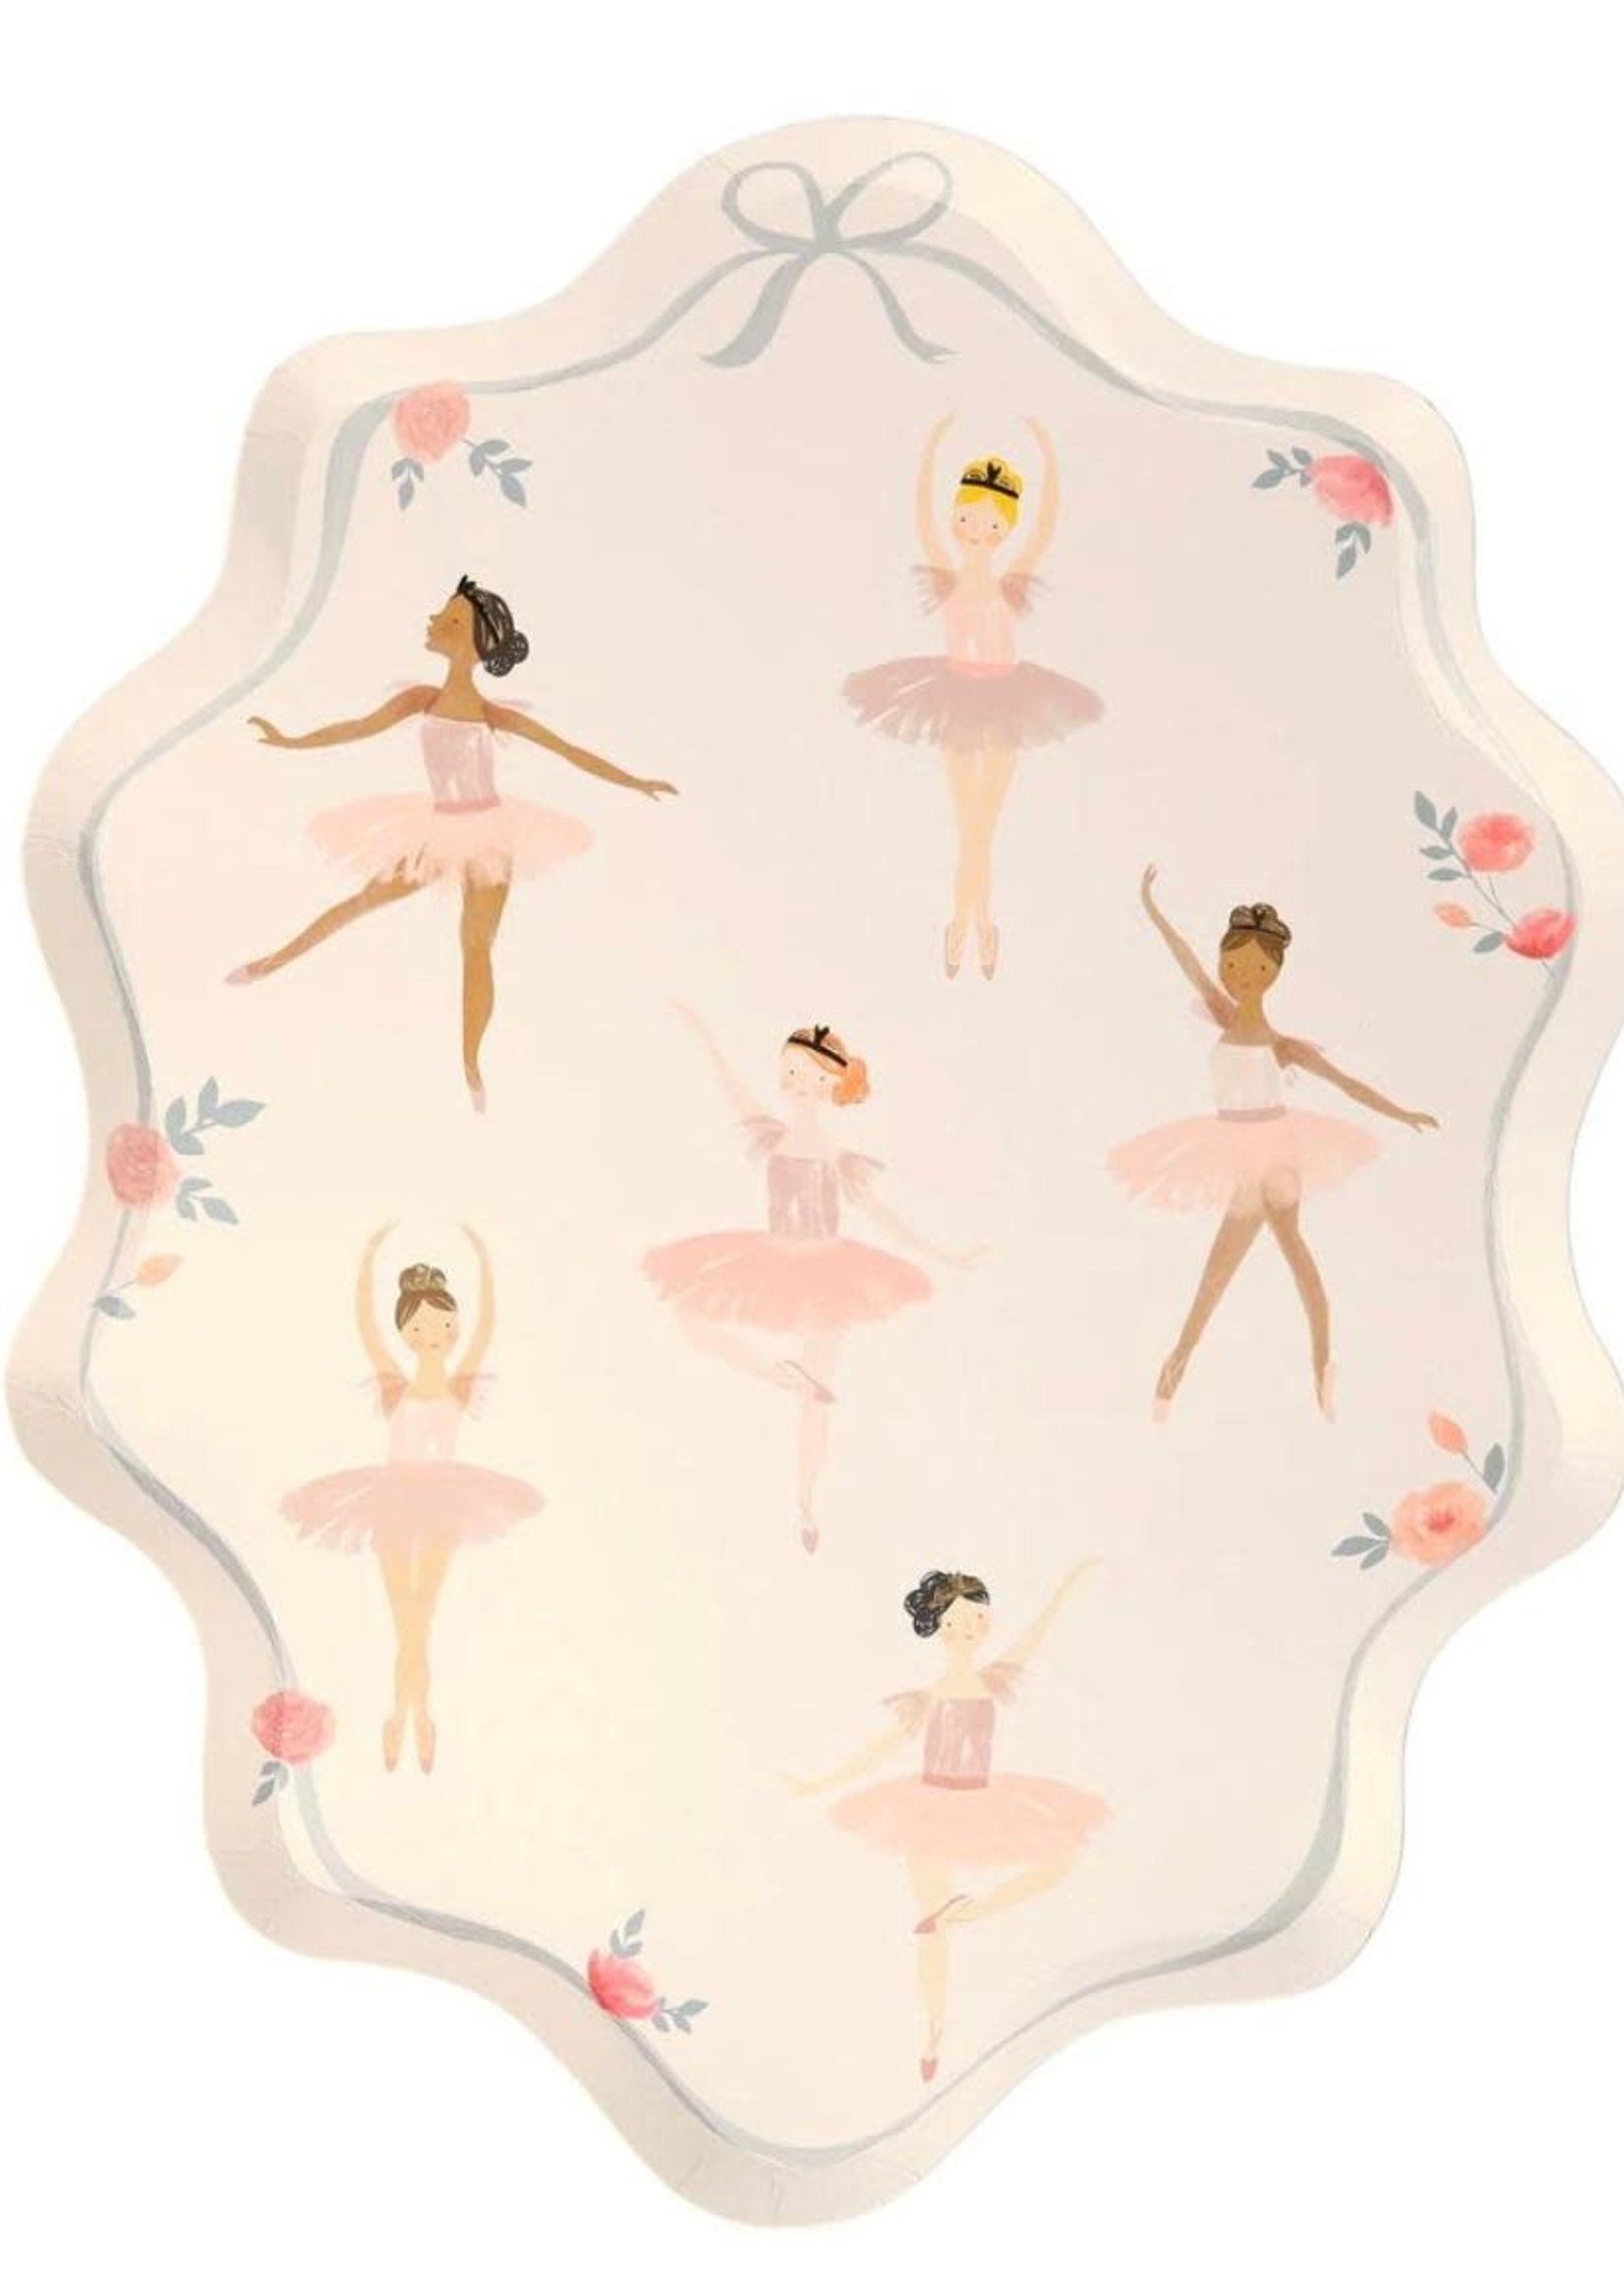 Creative Twist Events Ballerina Plates